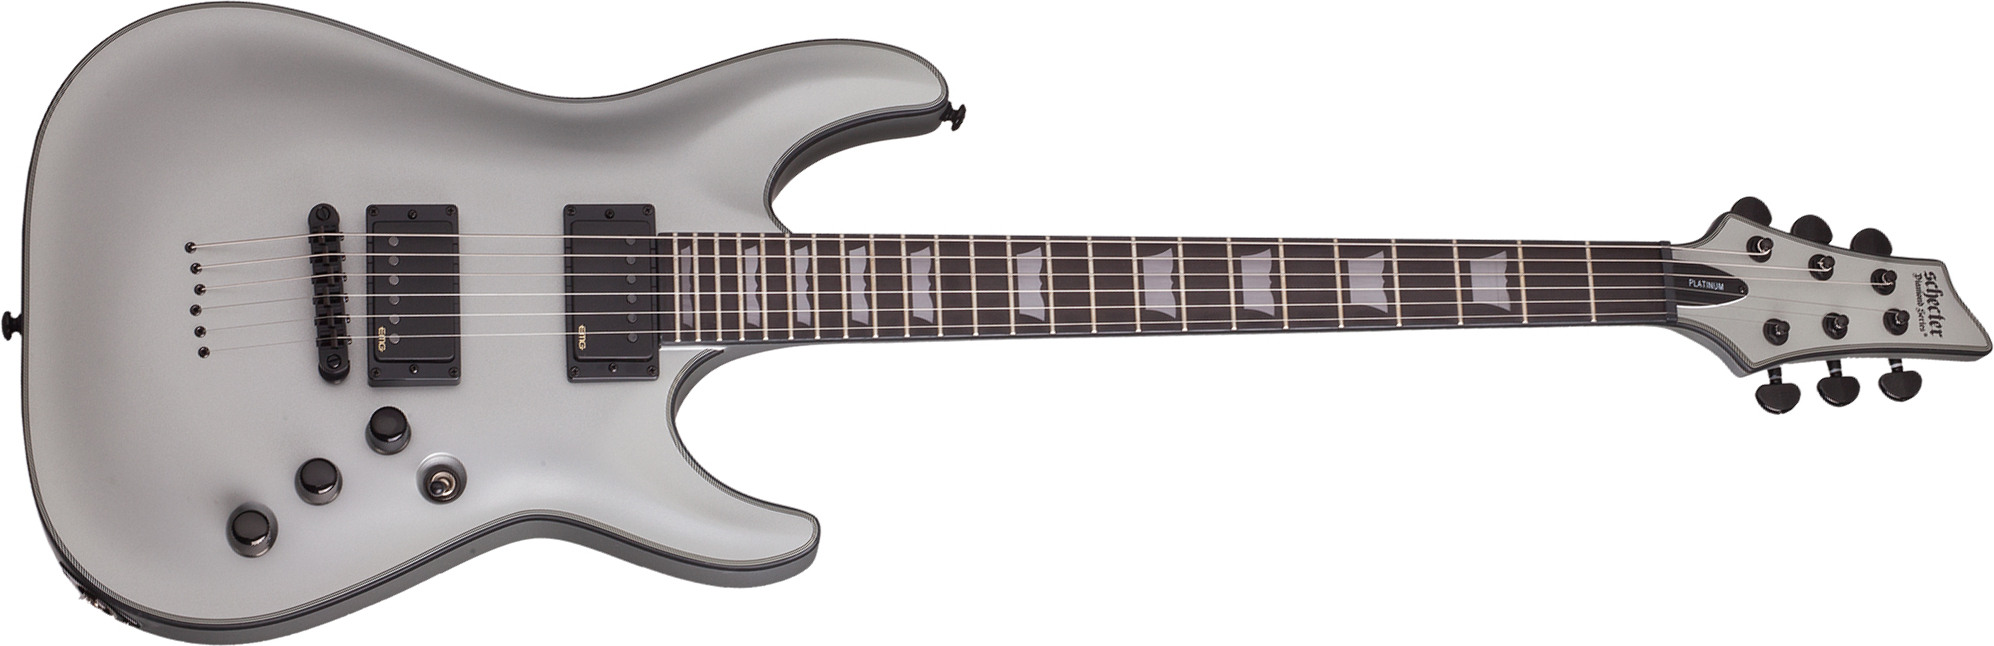 Schecter C-1 Platinum Hh Emg Ht Eb - Satin Silver - Str shape electric guitar - Main picture